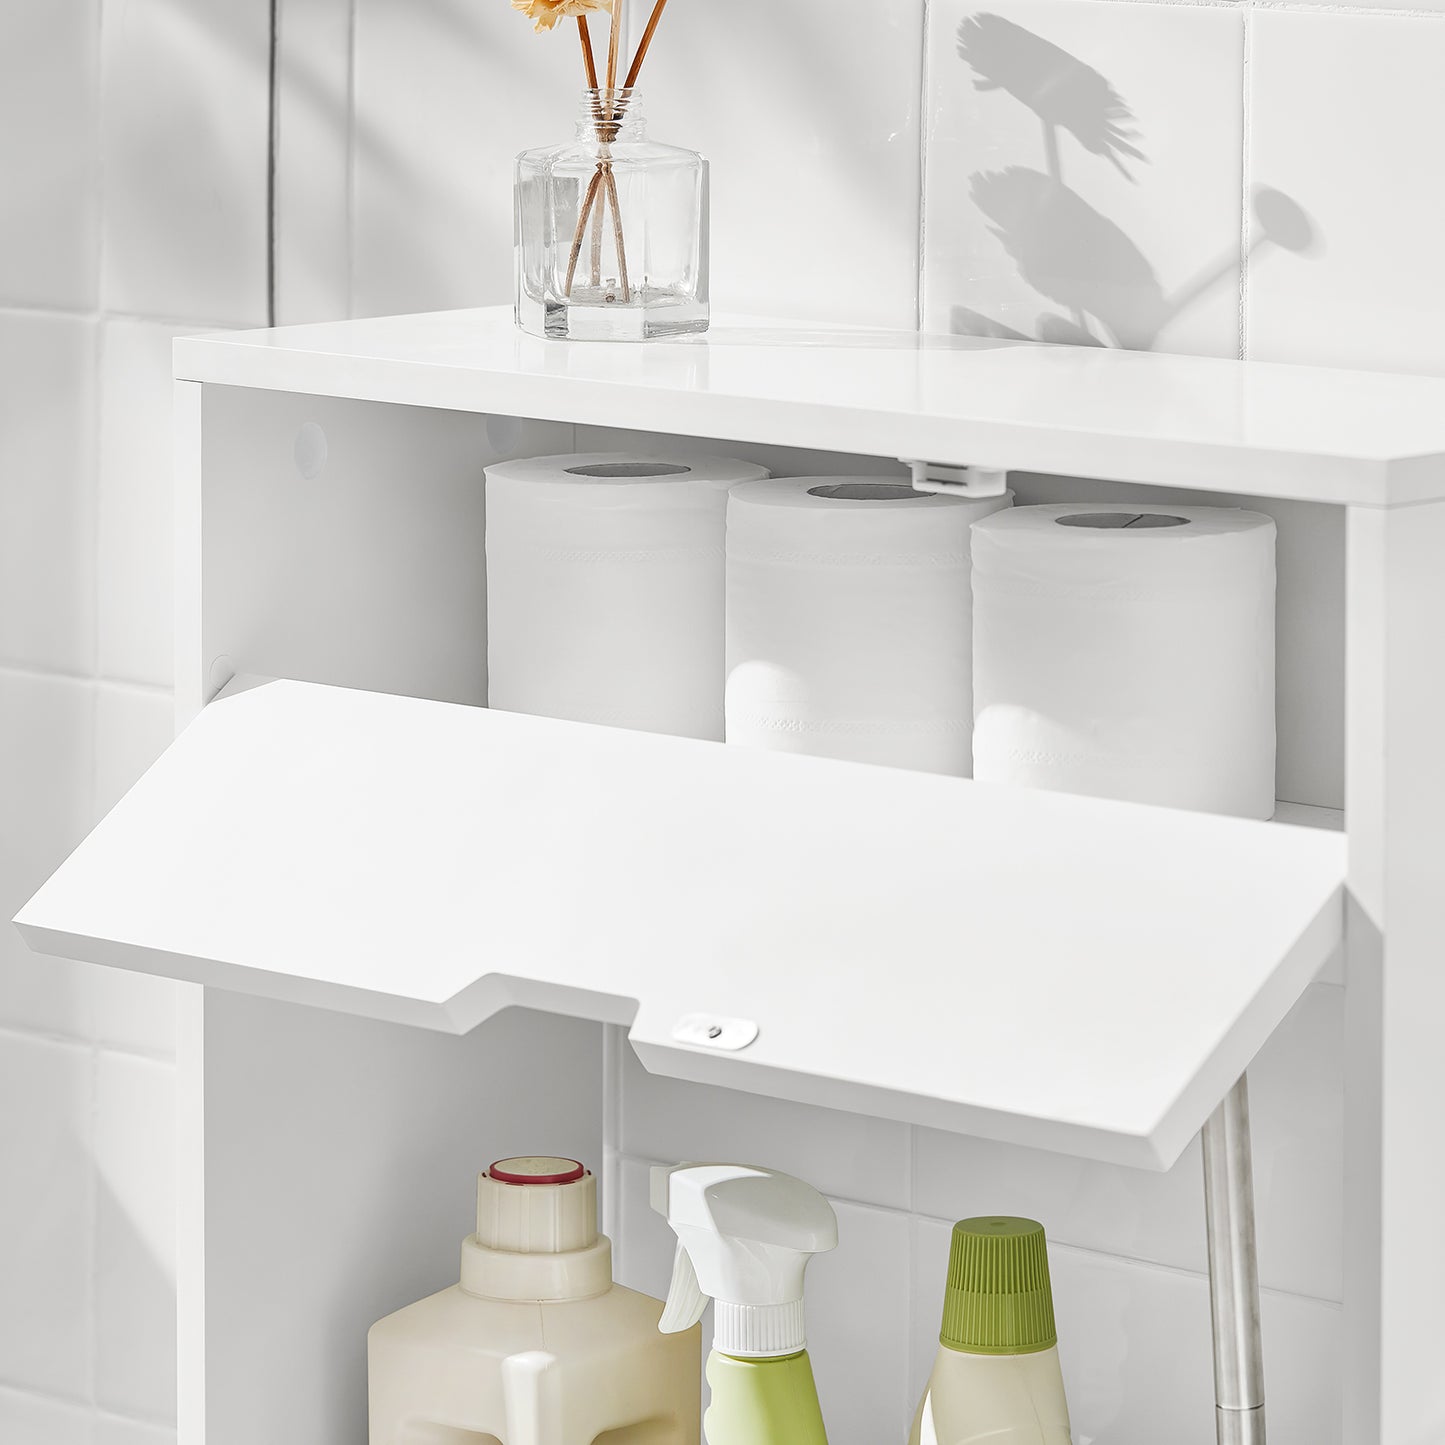 SoBuy Bathroom Toilet Paper Roll Holder, Bathroom Shelf Narrow Shelf Storage Cabinet